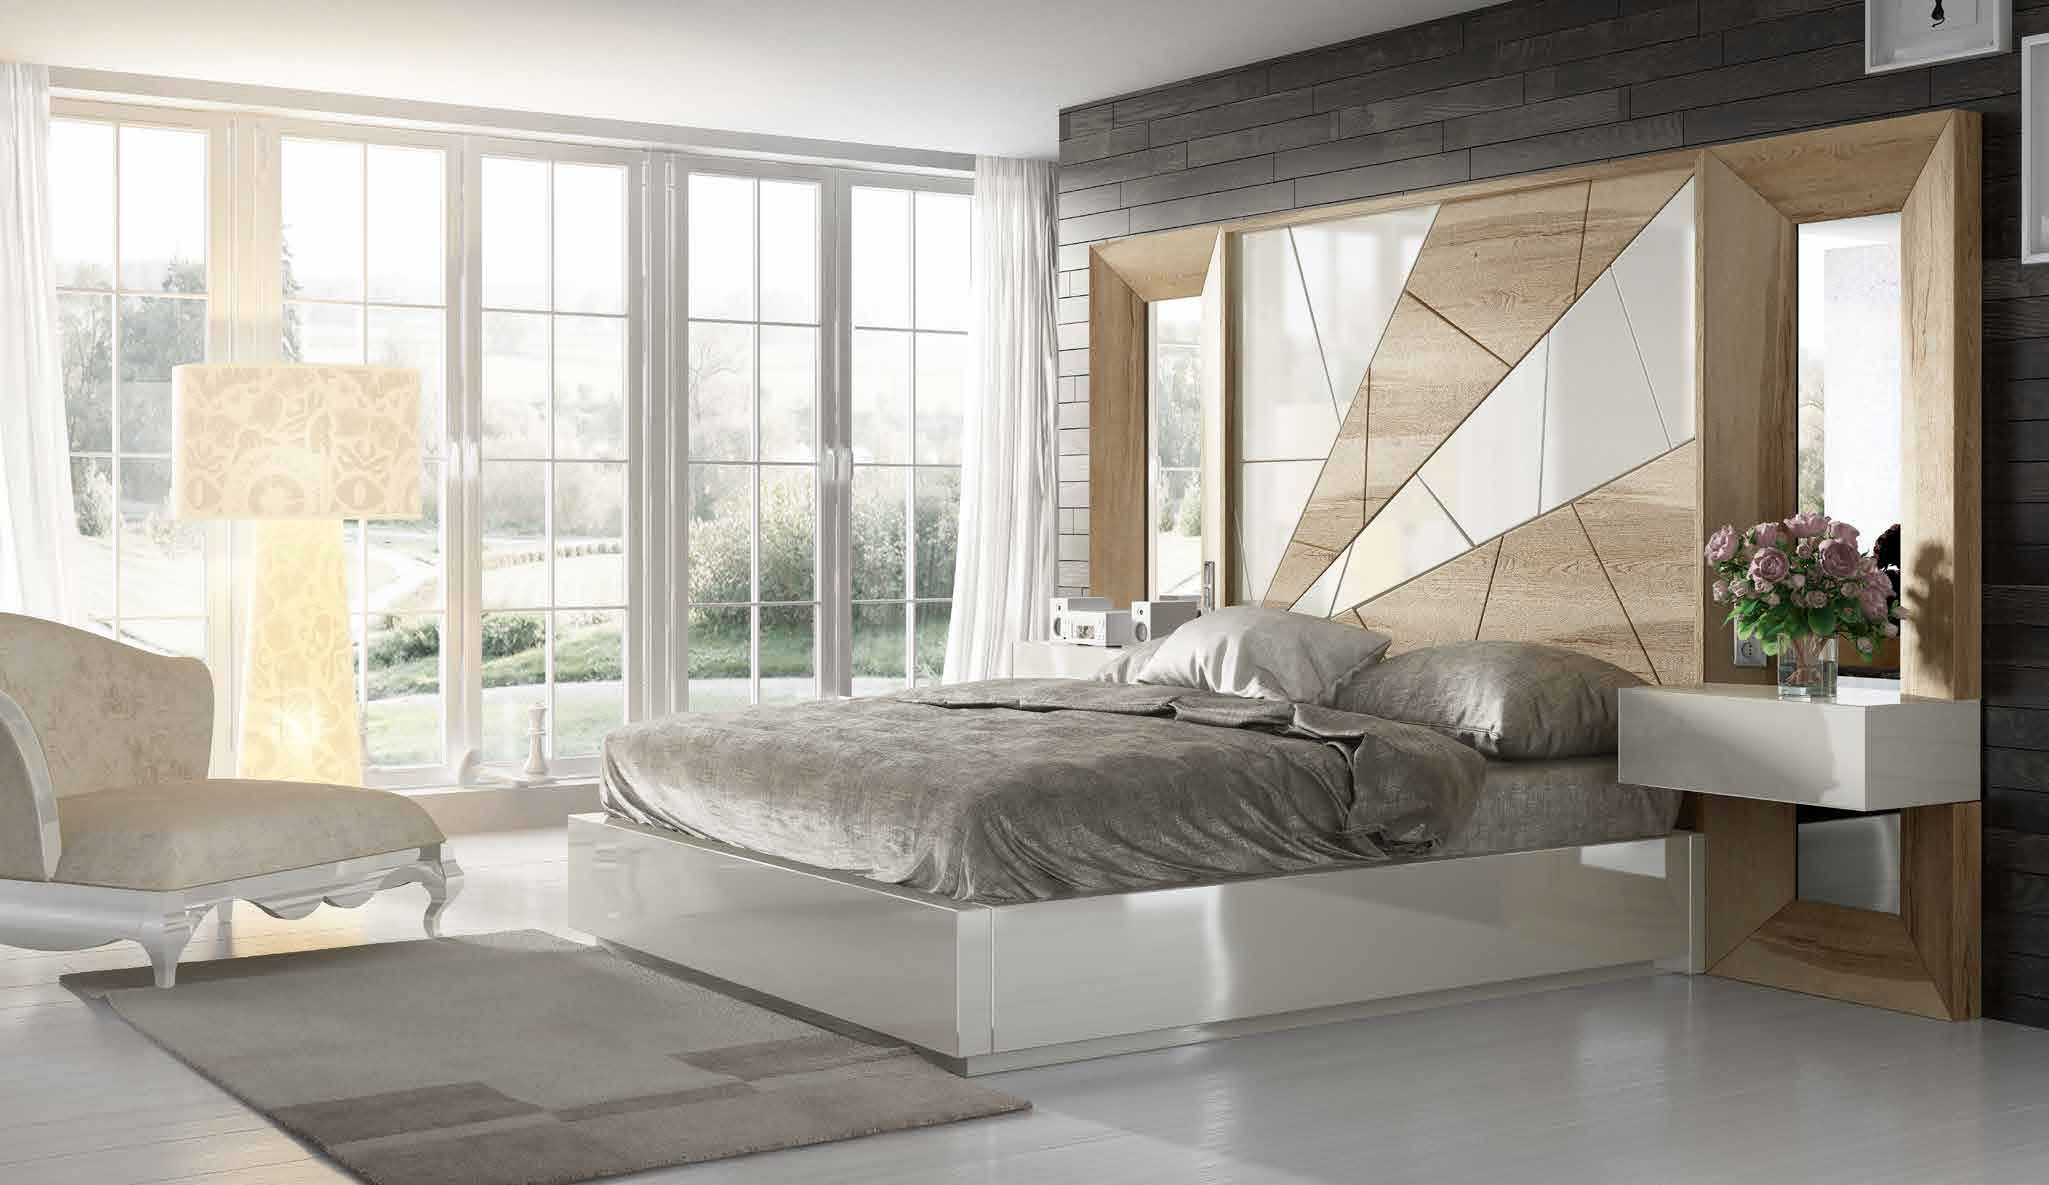 Brands Franco Furniture Bedrooms vol3, Spain DOR 32